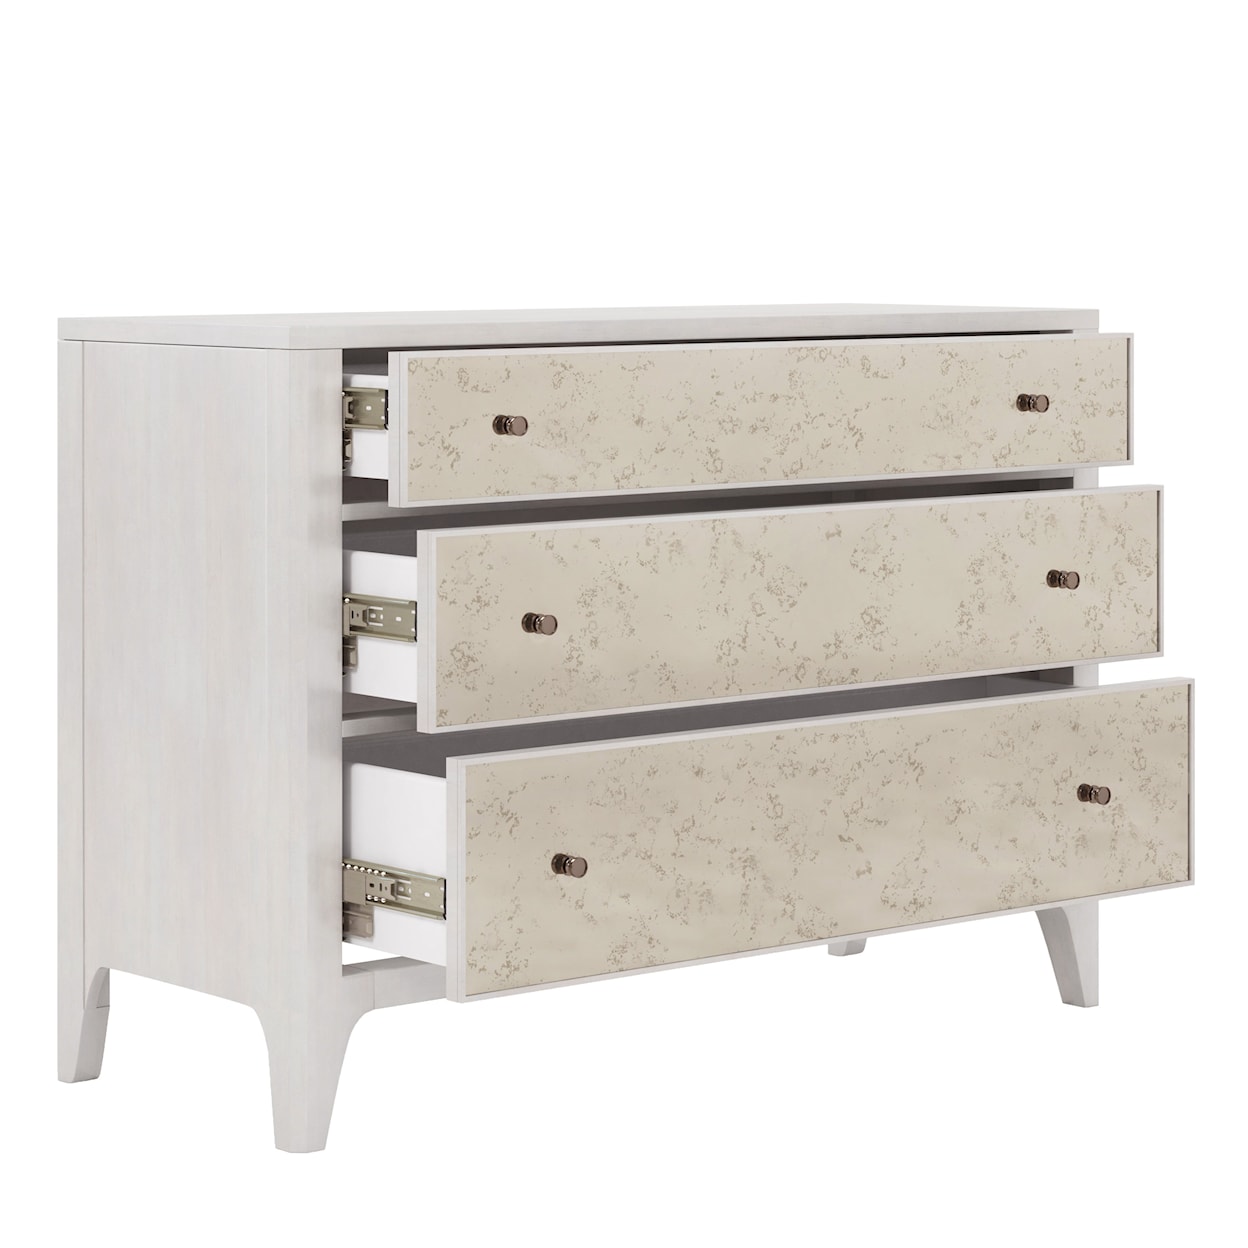 A.R.T. Furniture Inc Mezzanine 3-Drawer Single Dresser